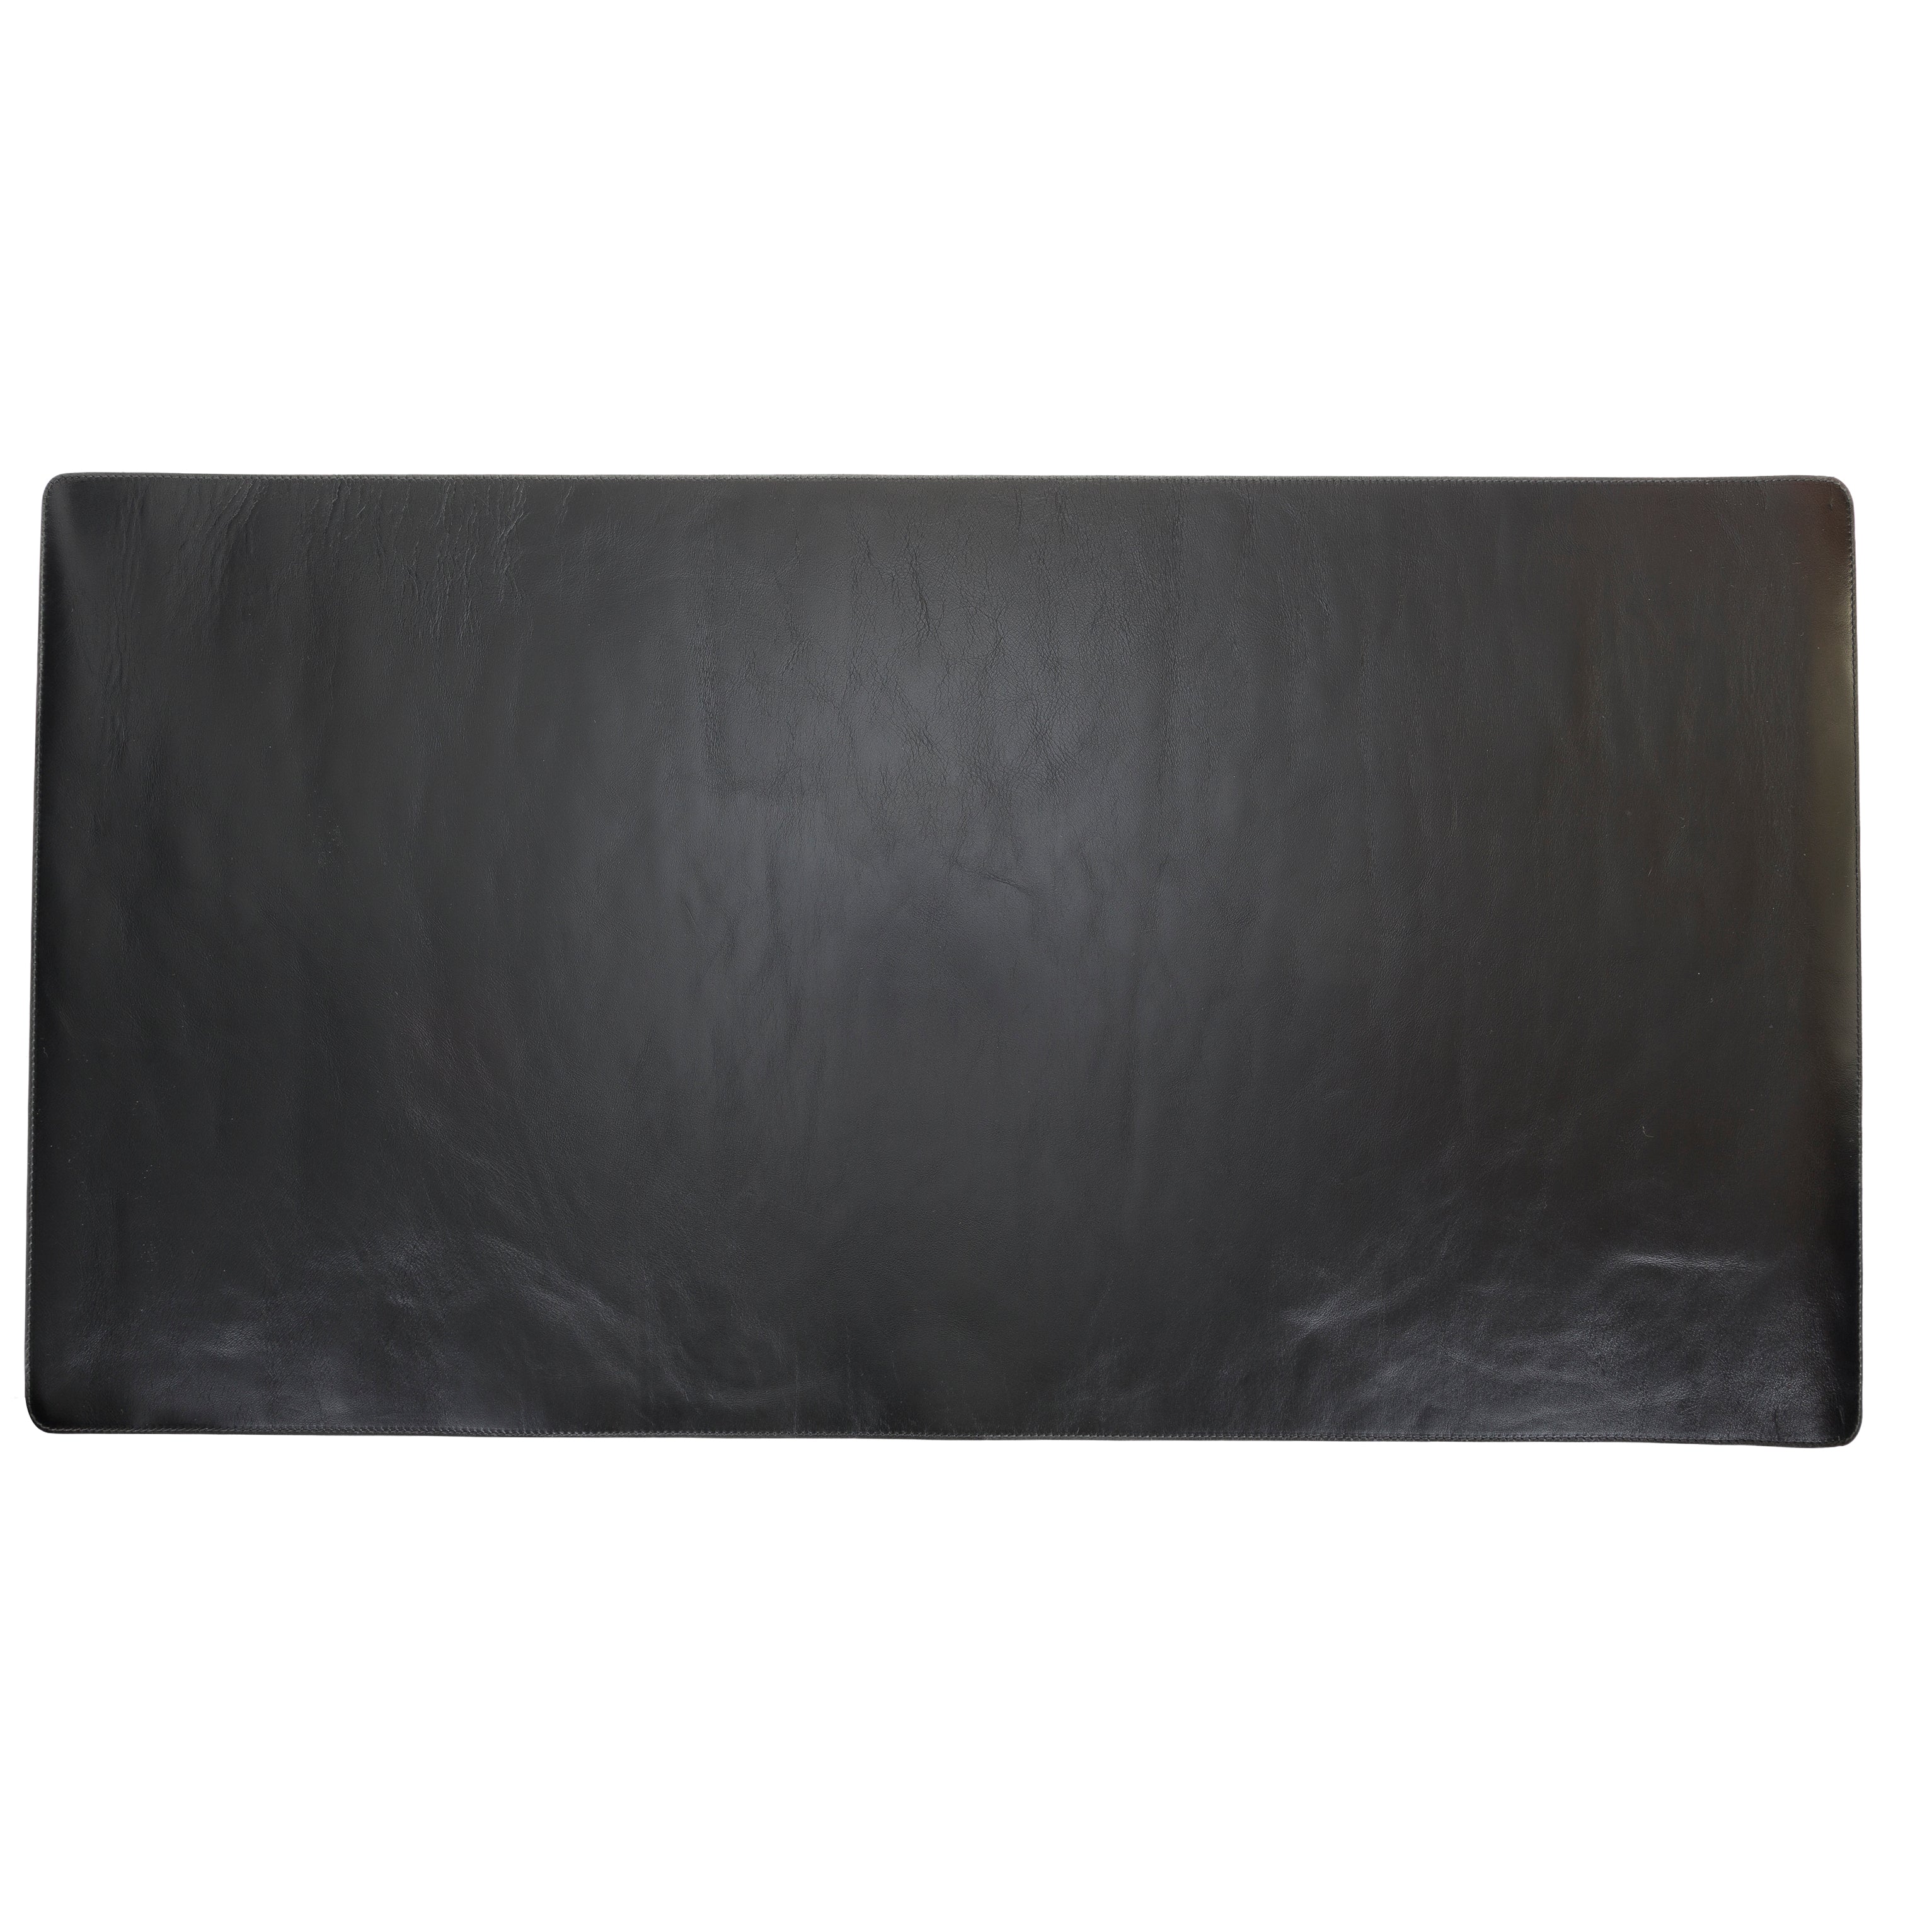 DelfiCase Genuine Leather Deskmat, Computer Pad, Office Desk Pad (Black) 8